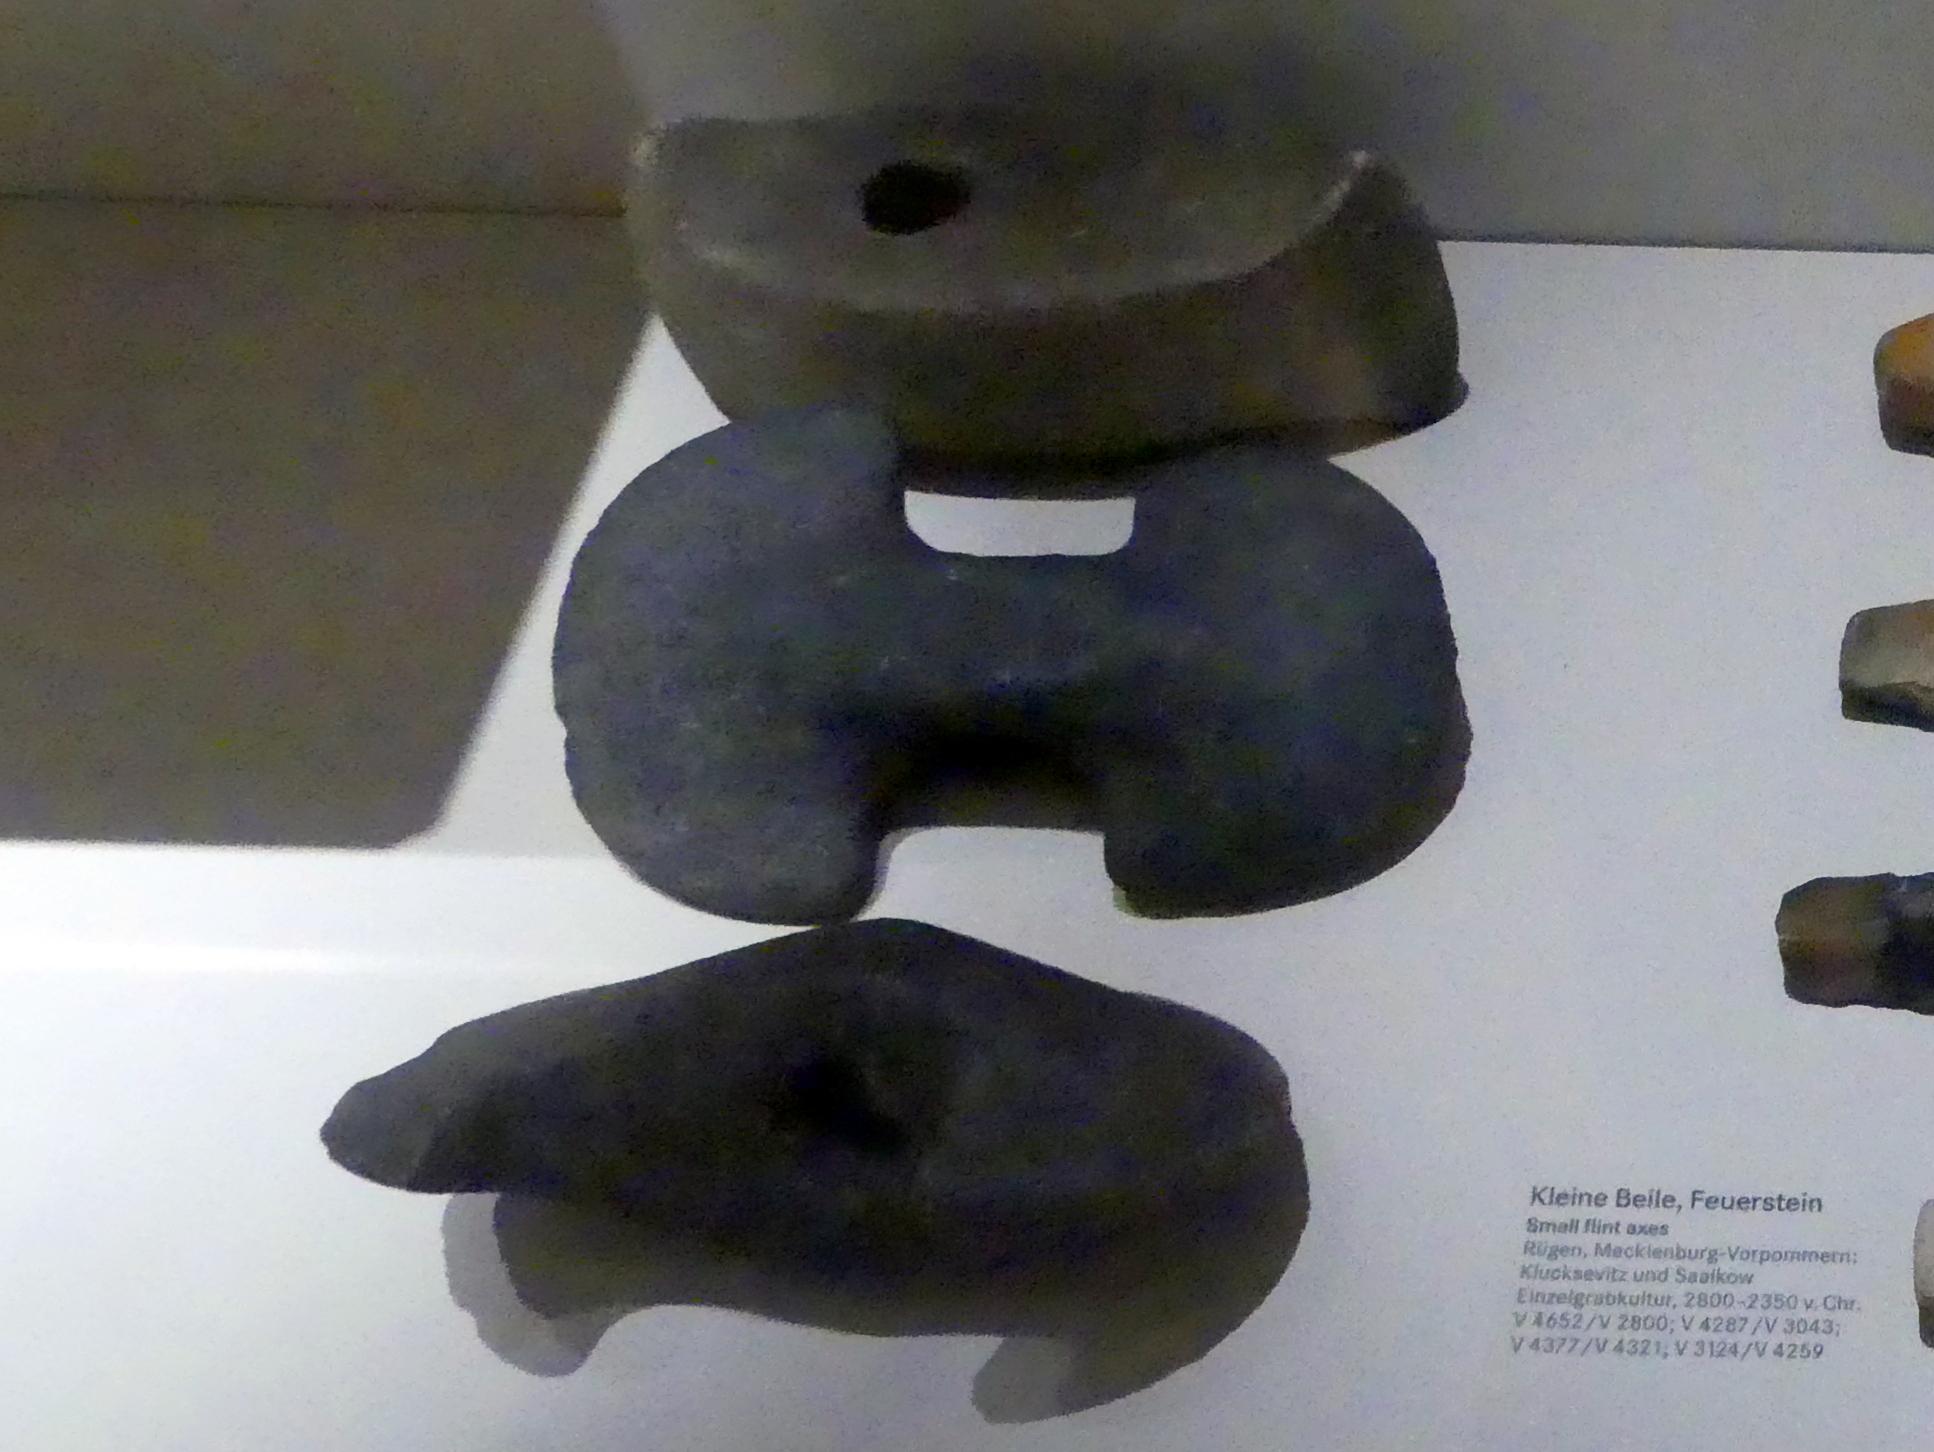 Doppelaxt, Nordisches Neolithikum, 4400 - 2350 v. Chr., 2800 - 2350 v. Chr., Bild 1/2